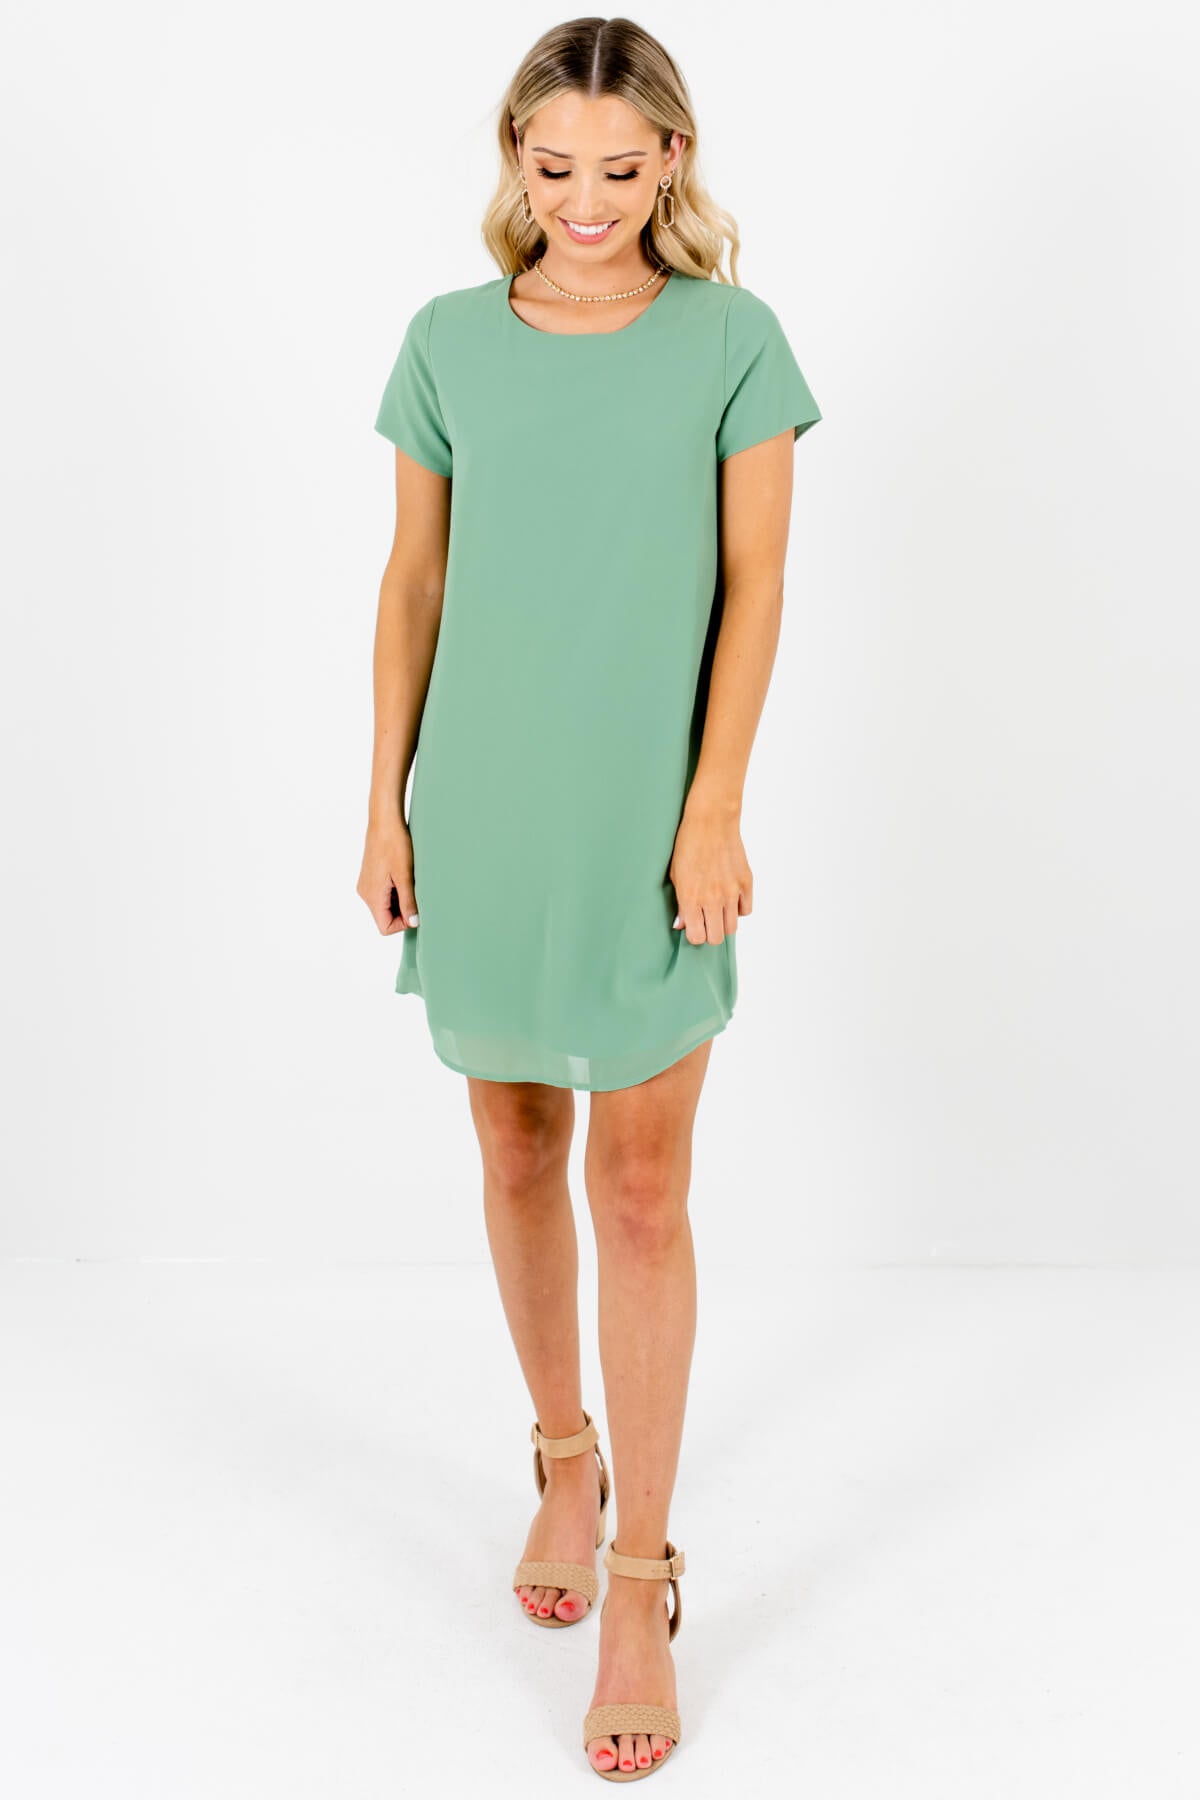 Light Green Short Sleeve Mini Dresses Affordable Boutique